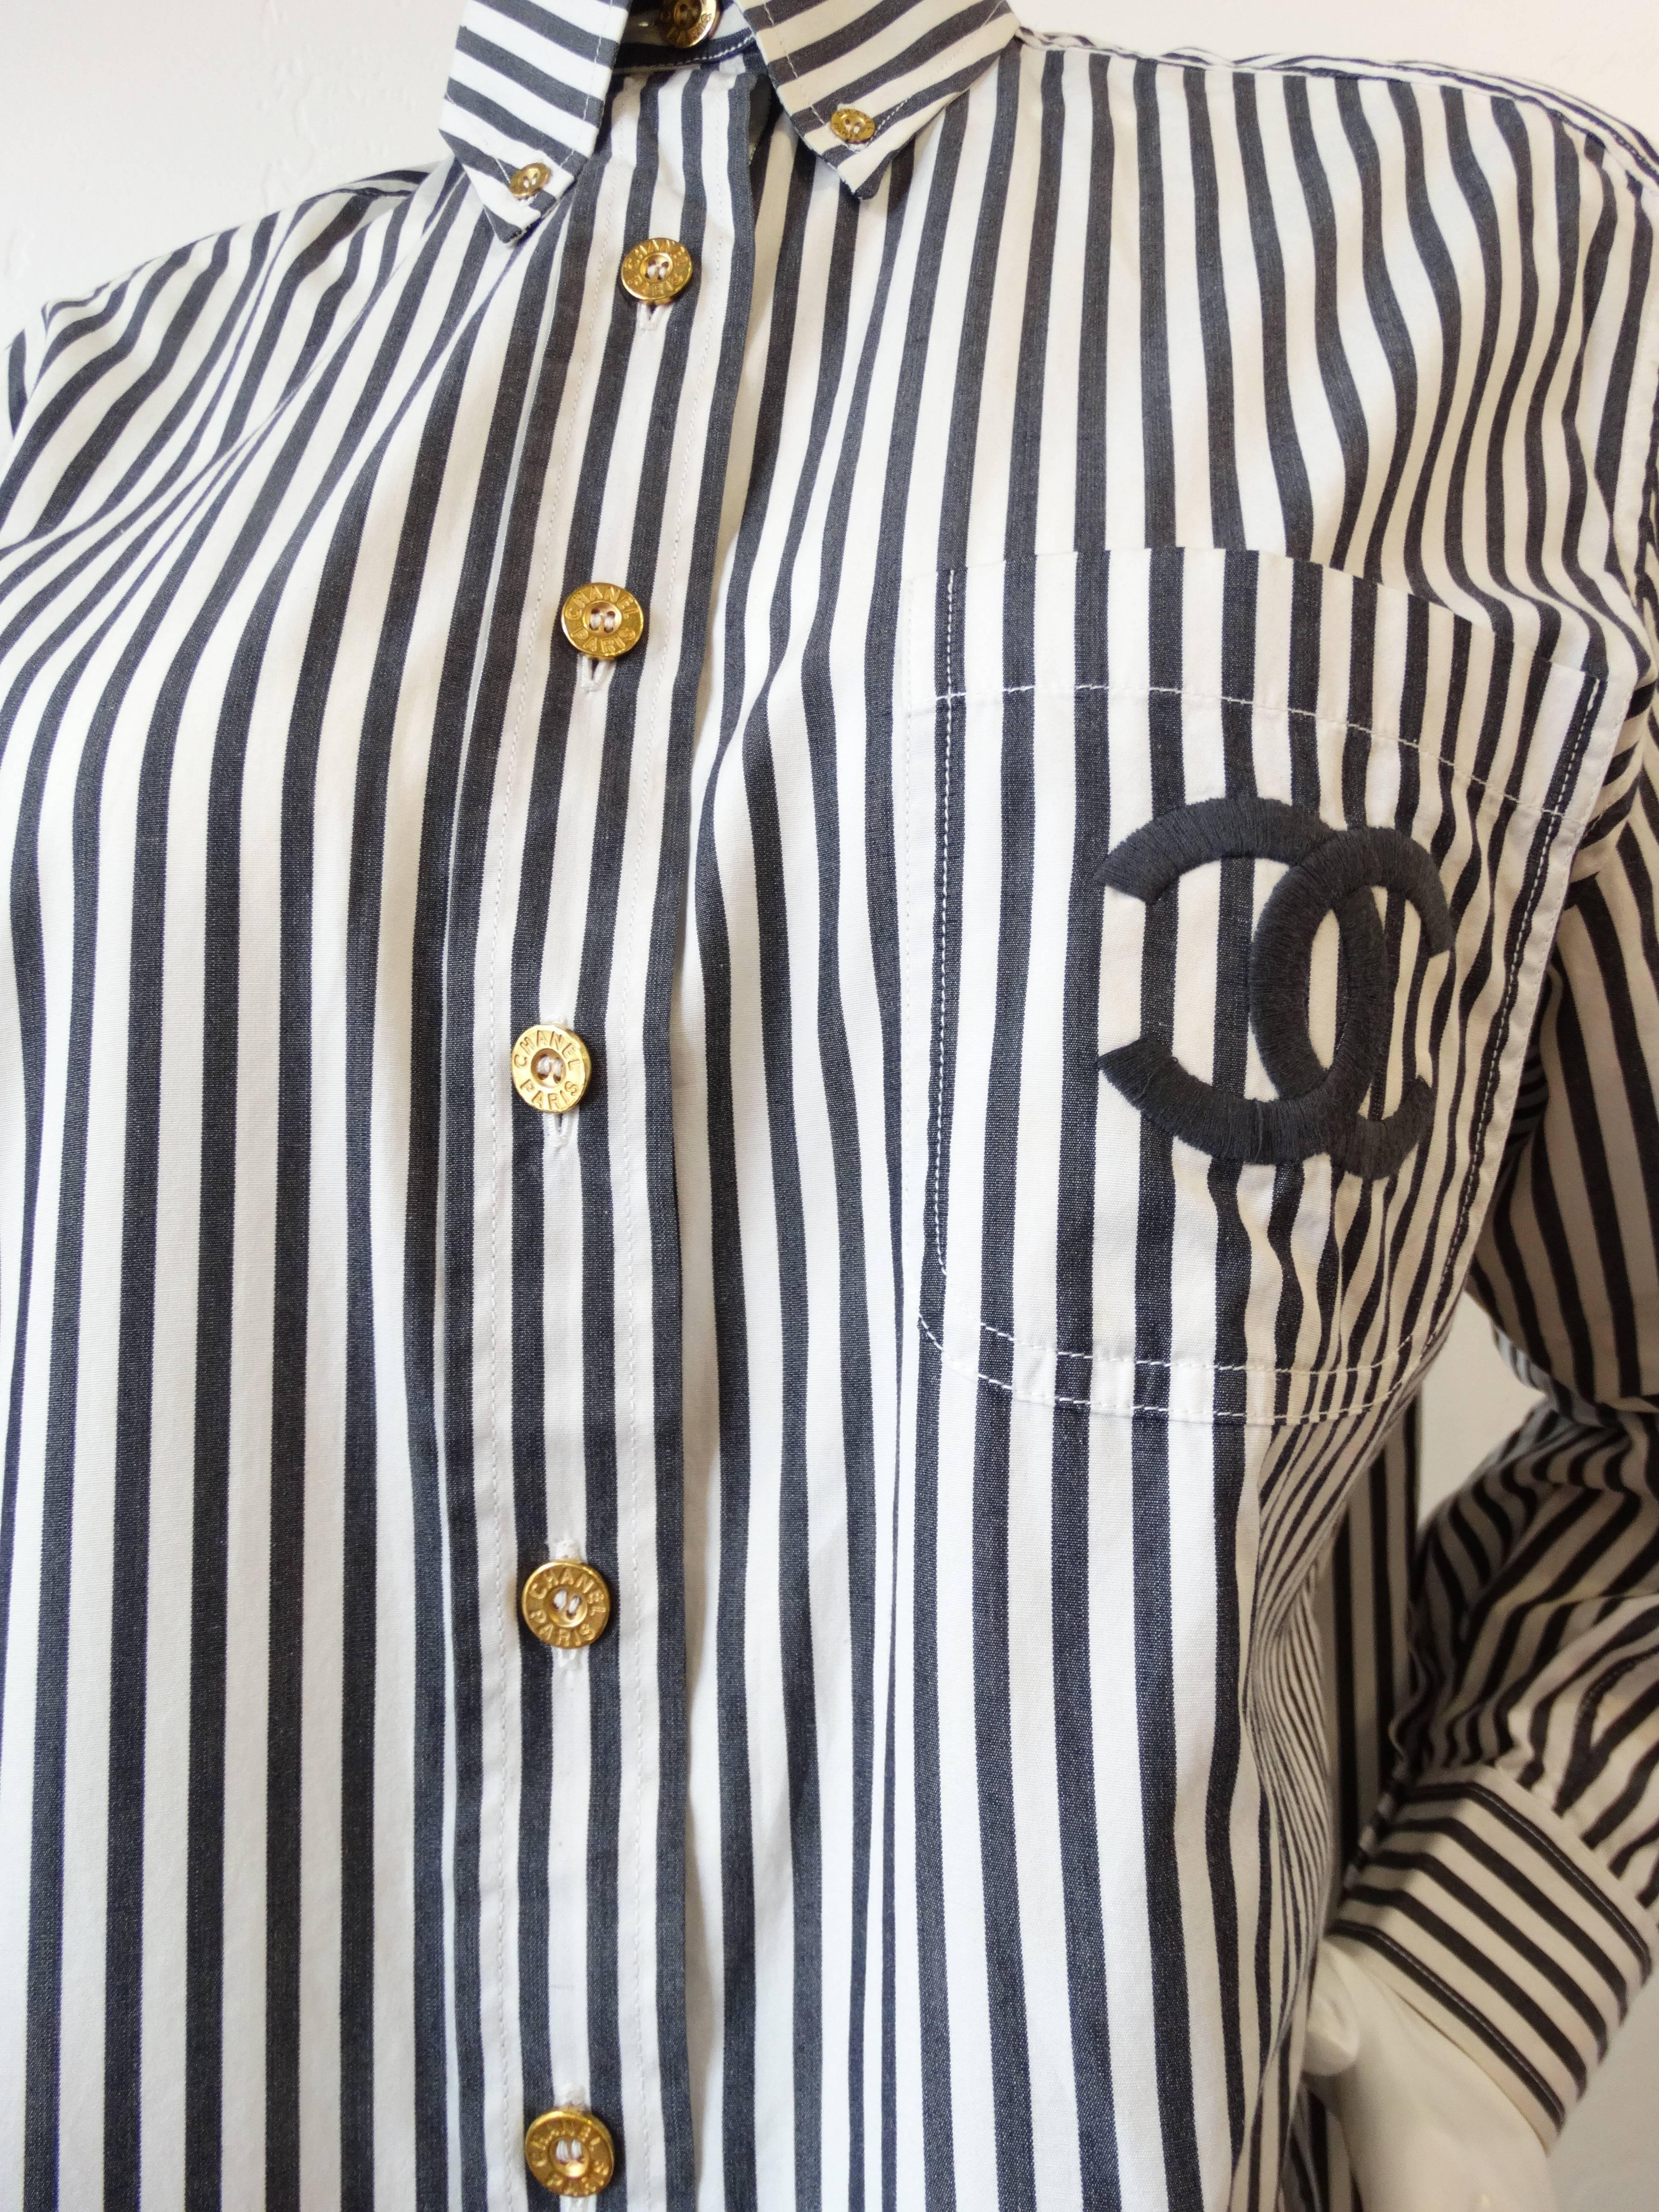 Women's or Men's Rare 1990s Chanel Striped Button Up Dress Shirt 